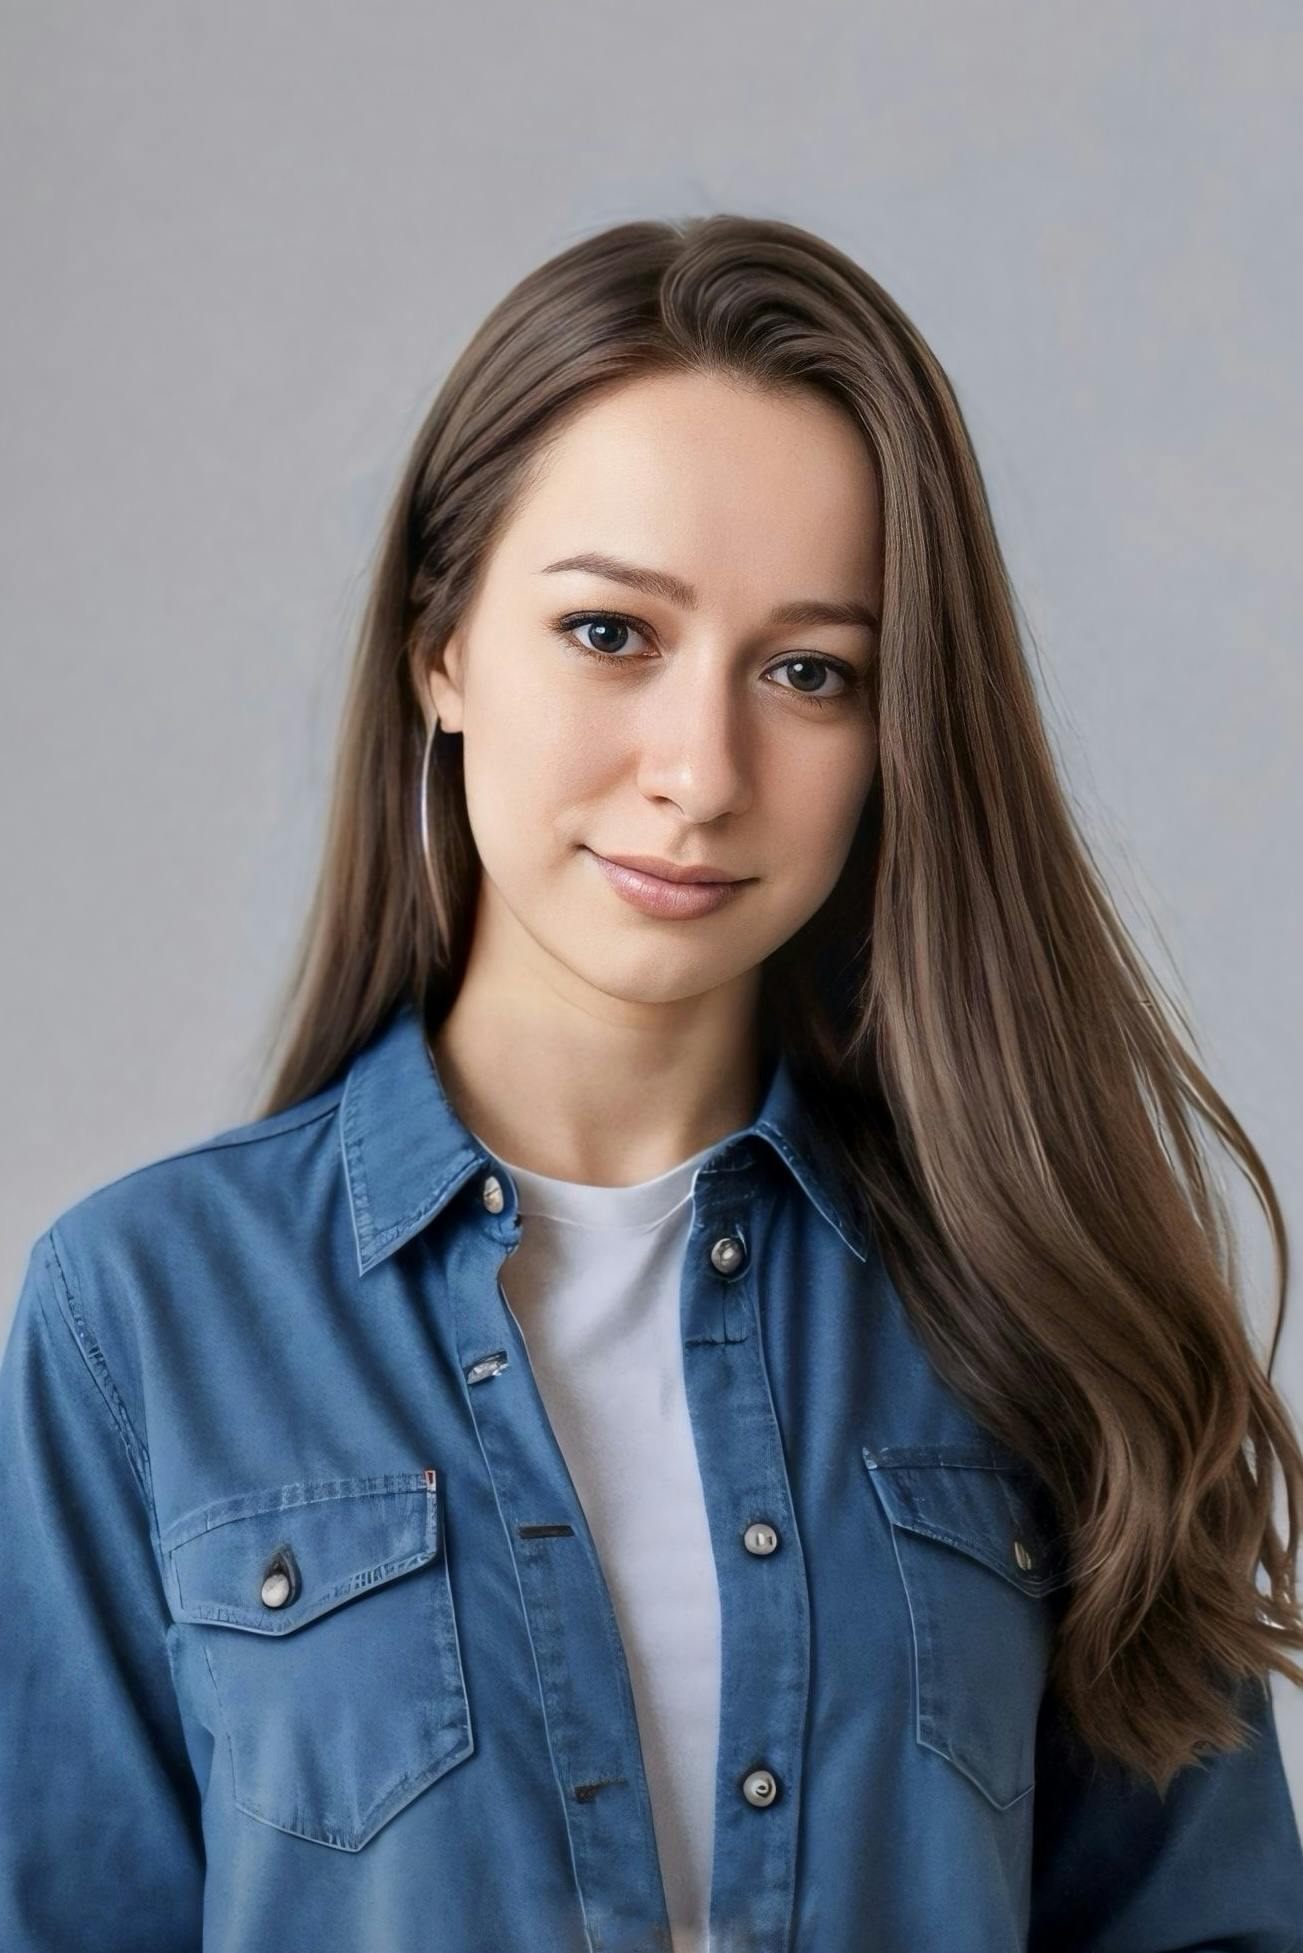 Team member Anna Klimchuk